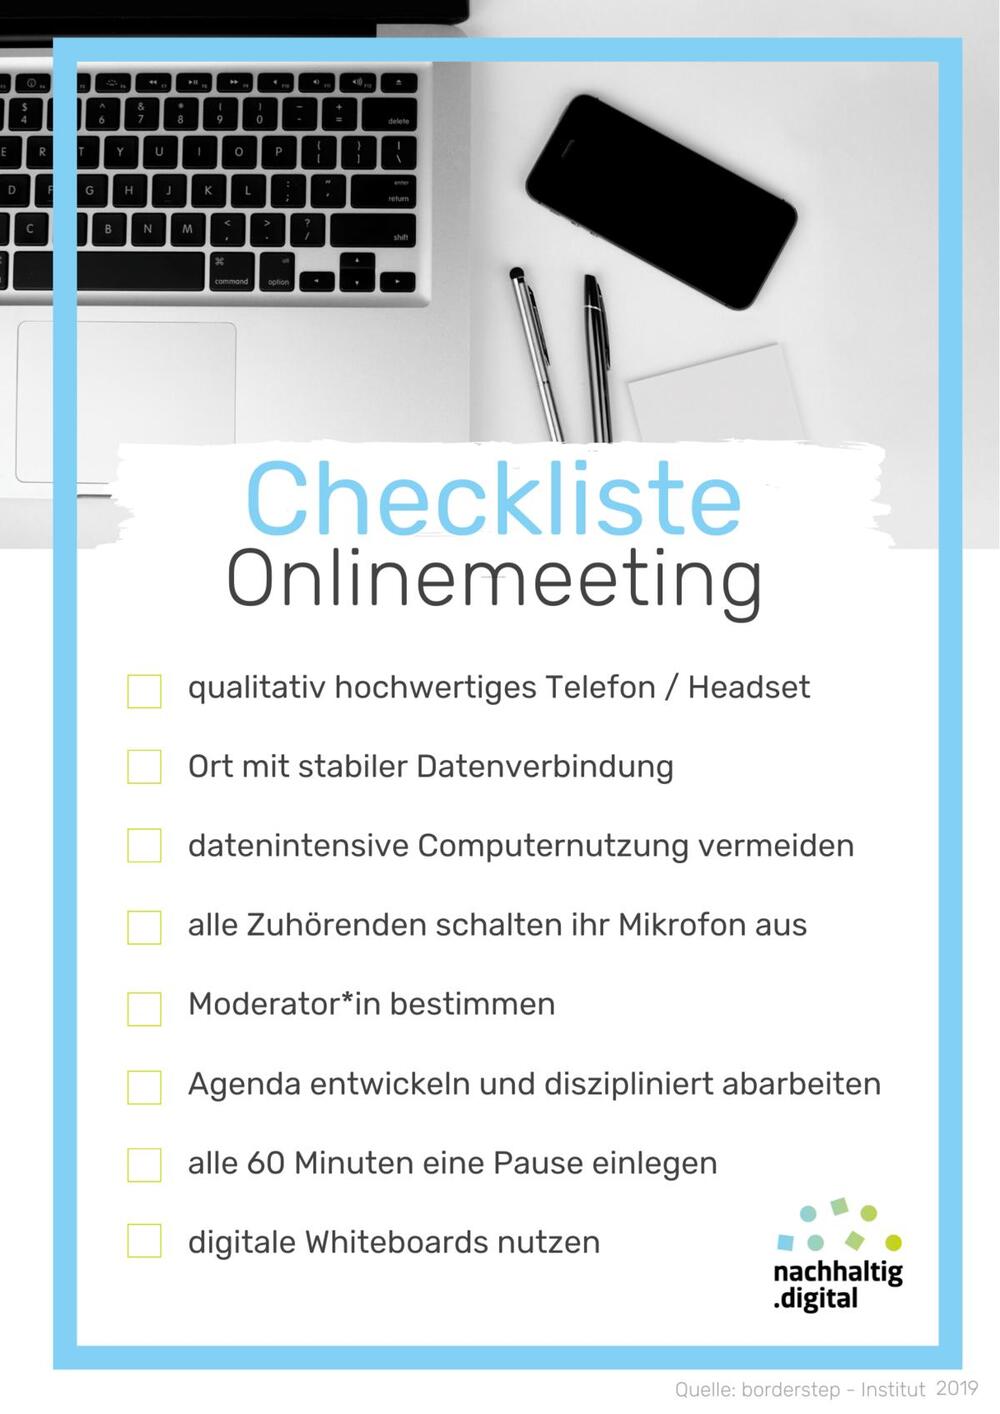 Checkliste Online-Meeting nachhaltig.digital © nachhaltig.digital